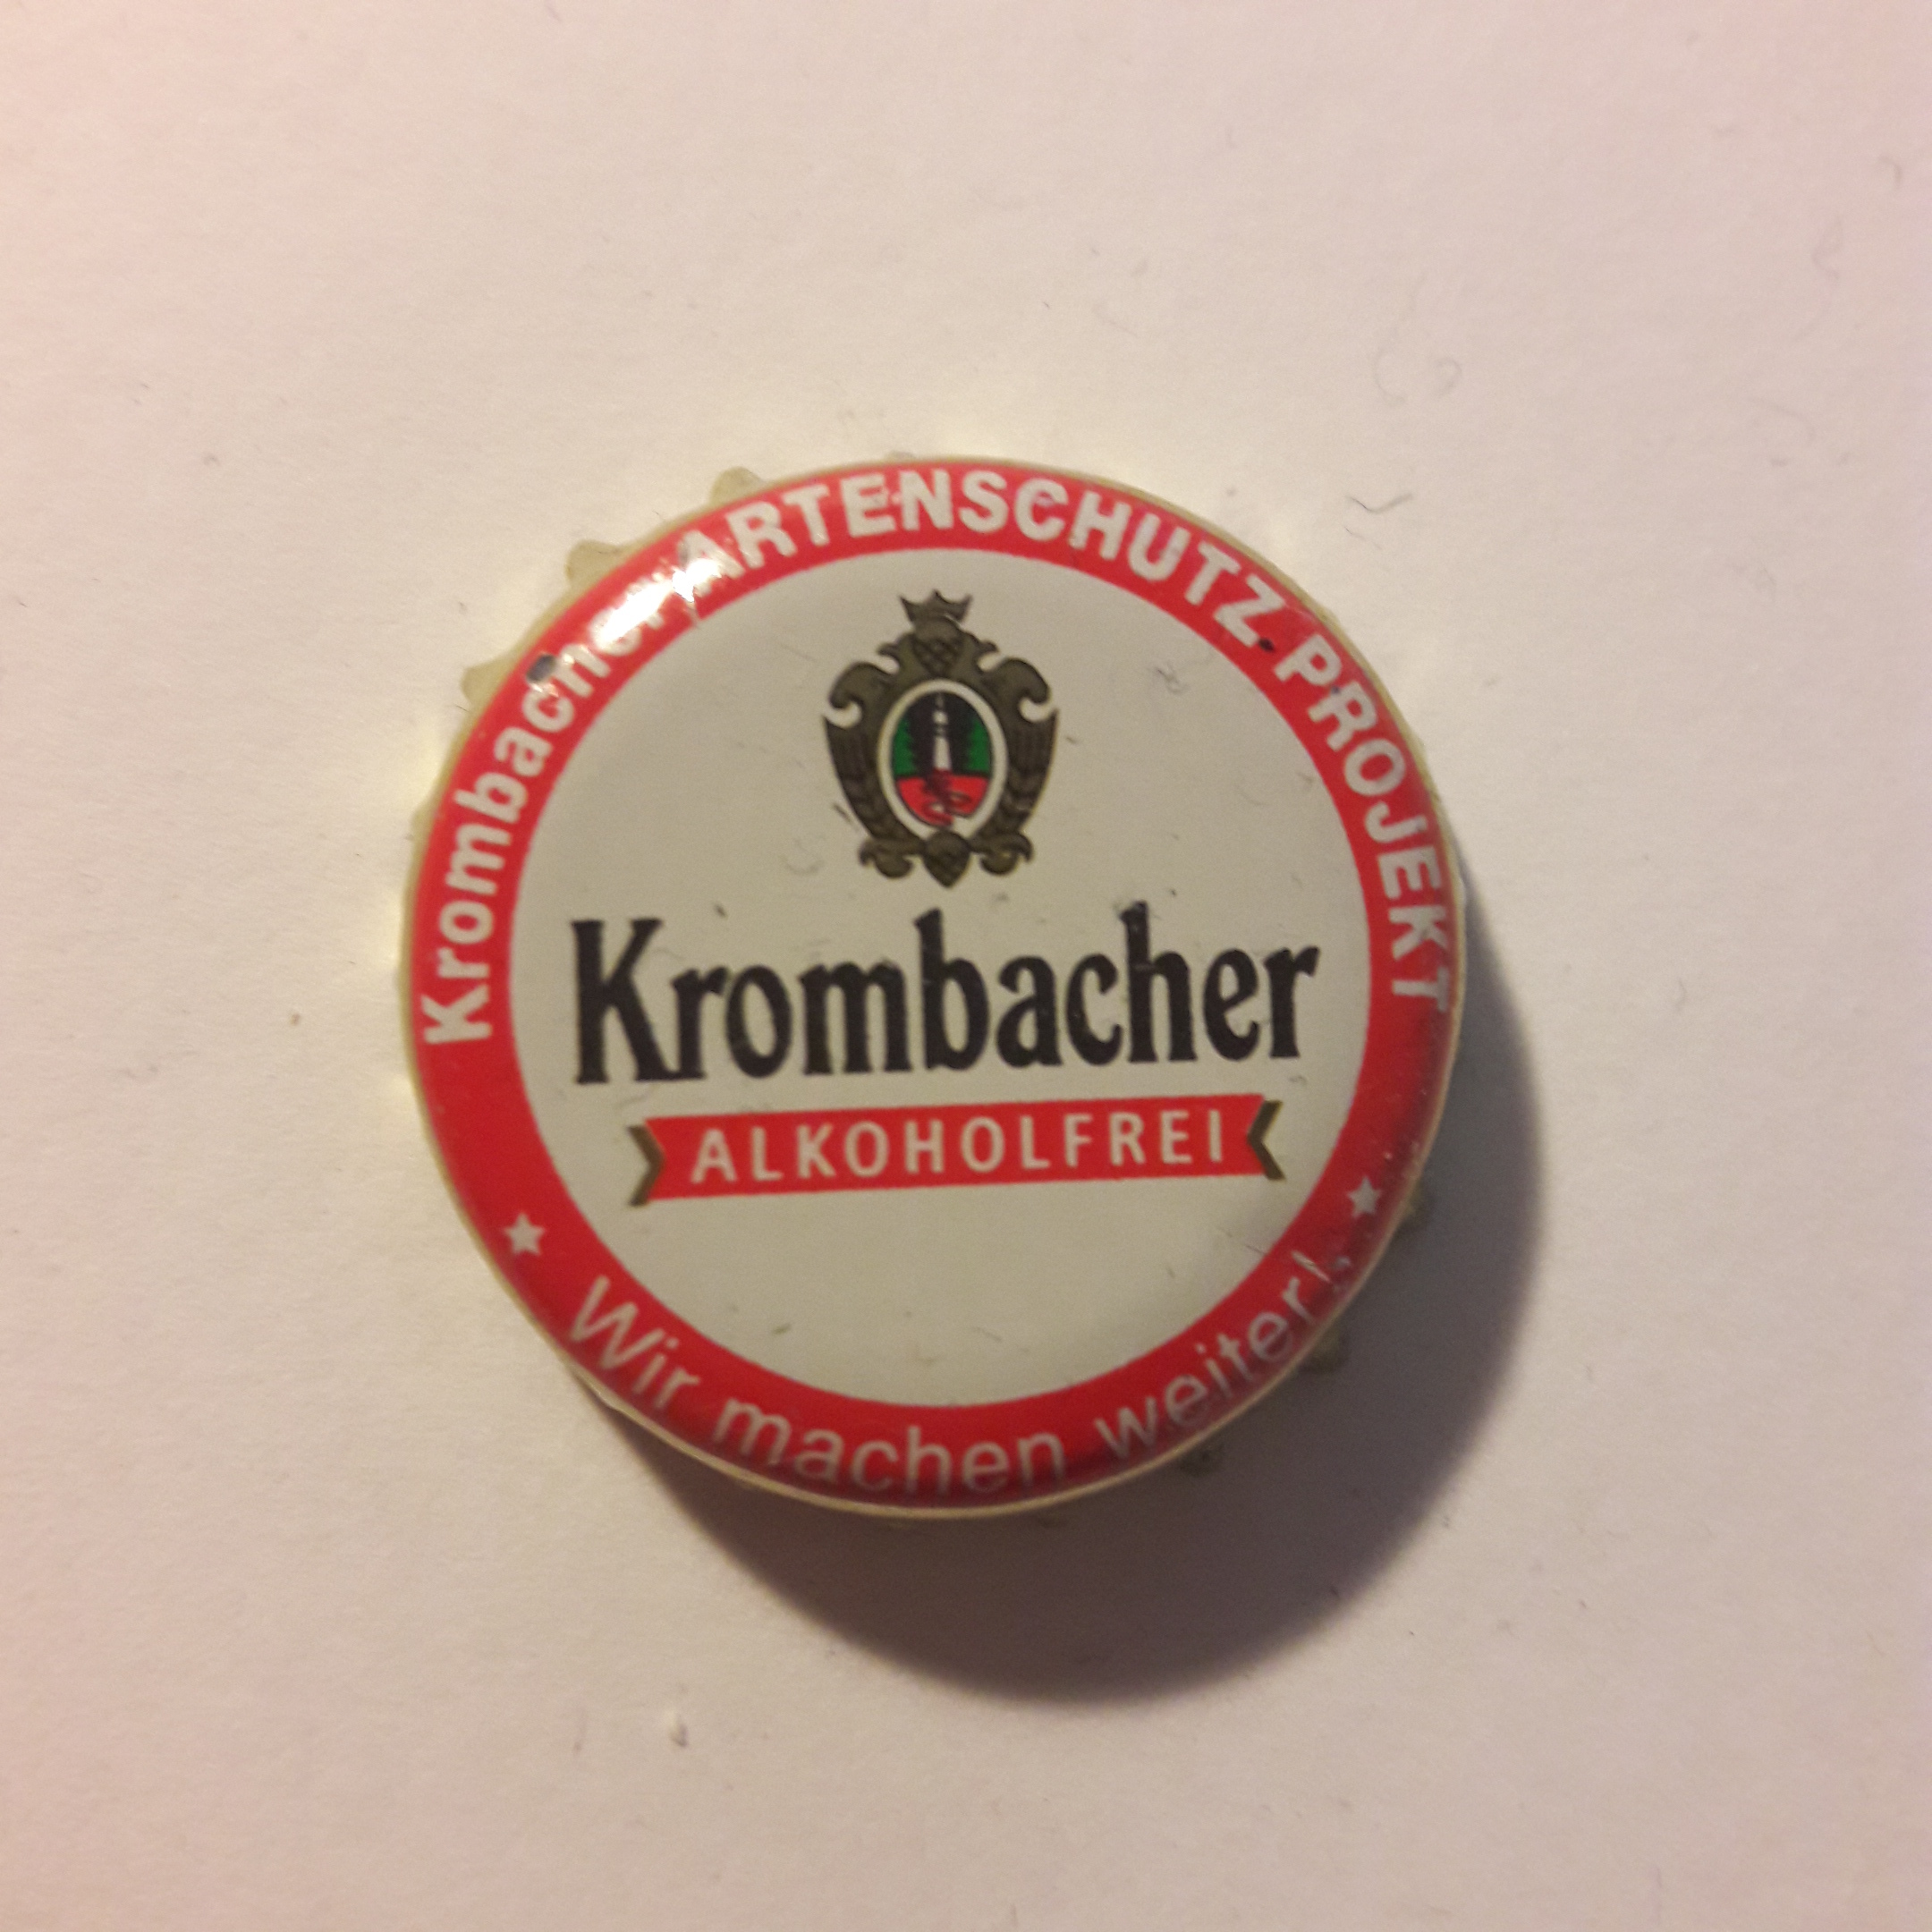 Krombacher Pils alkoholfrei Aktion 2017